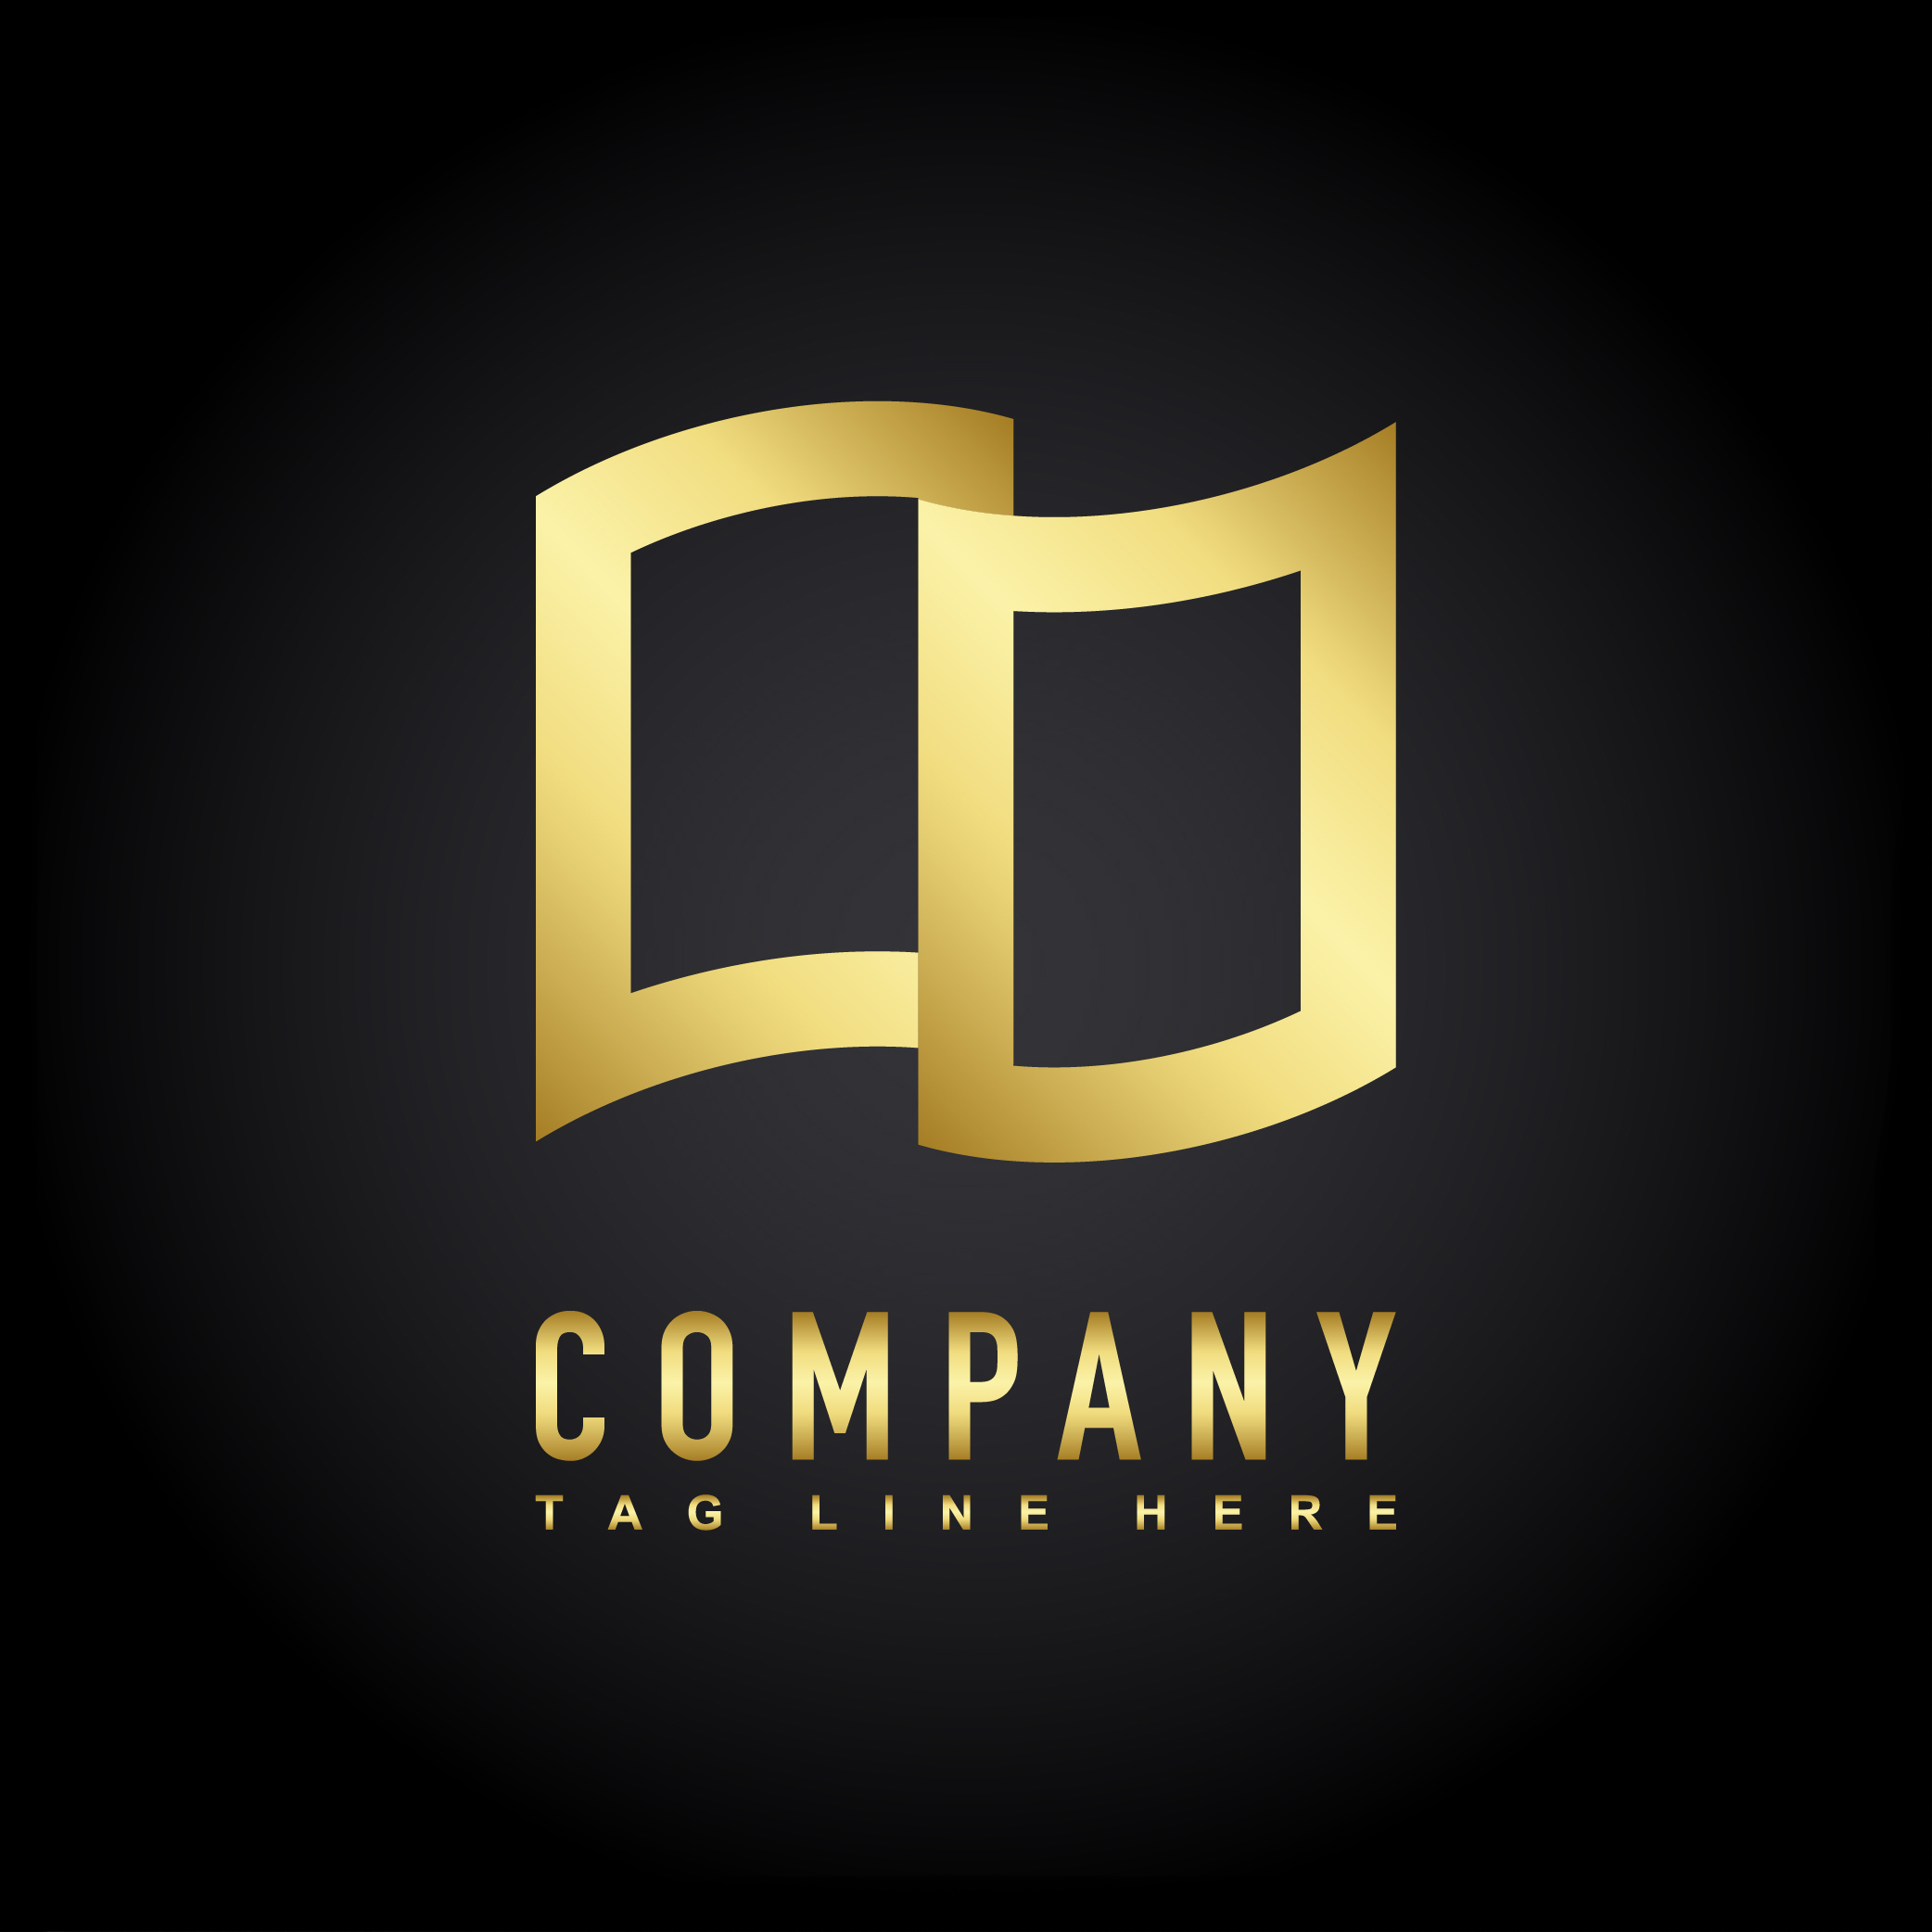 Logo Designs Company Logos Images